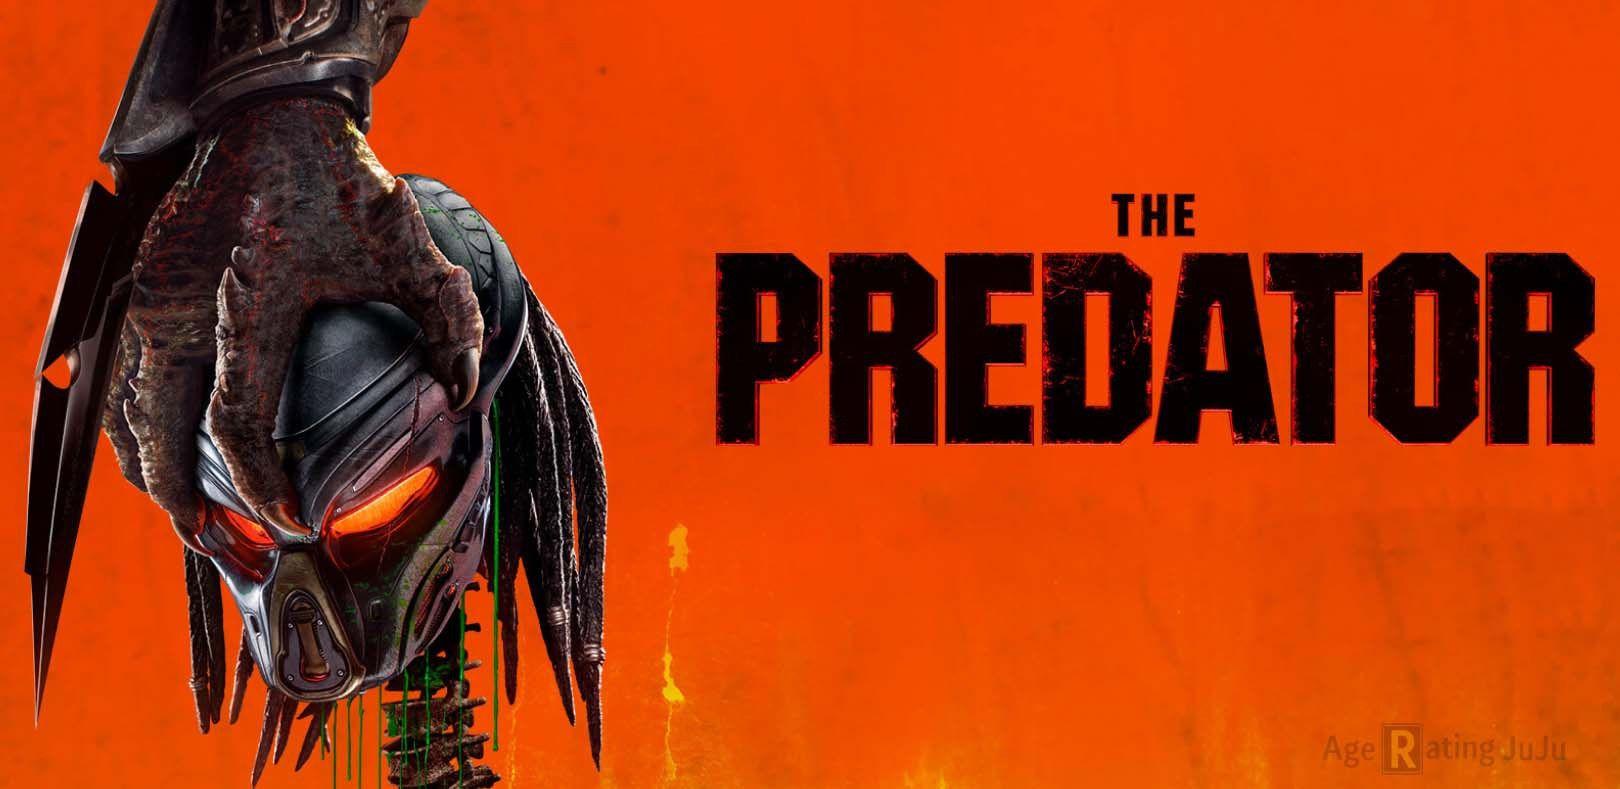 The Predator 2018 Poster Image and Wallpaper. Age Rating JuJu